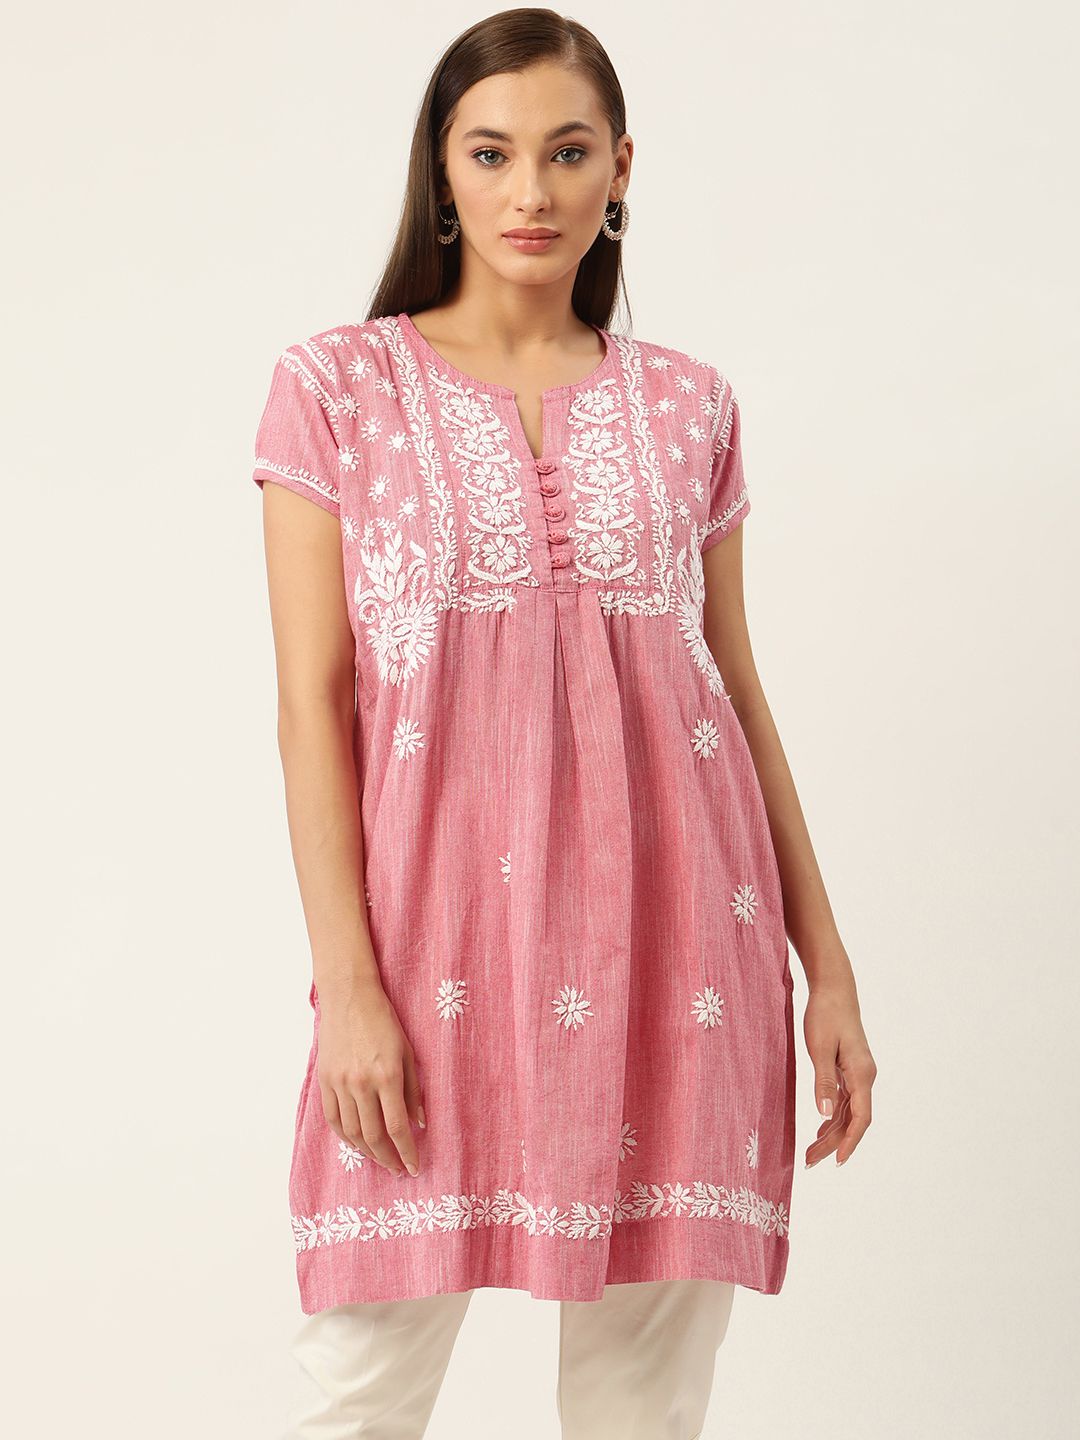 HOUSE OF KARI Pink & White Cotton Chikankari Embroidered Tunic Price in India